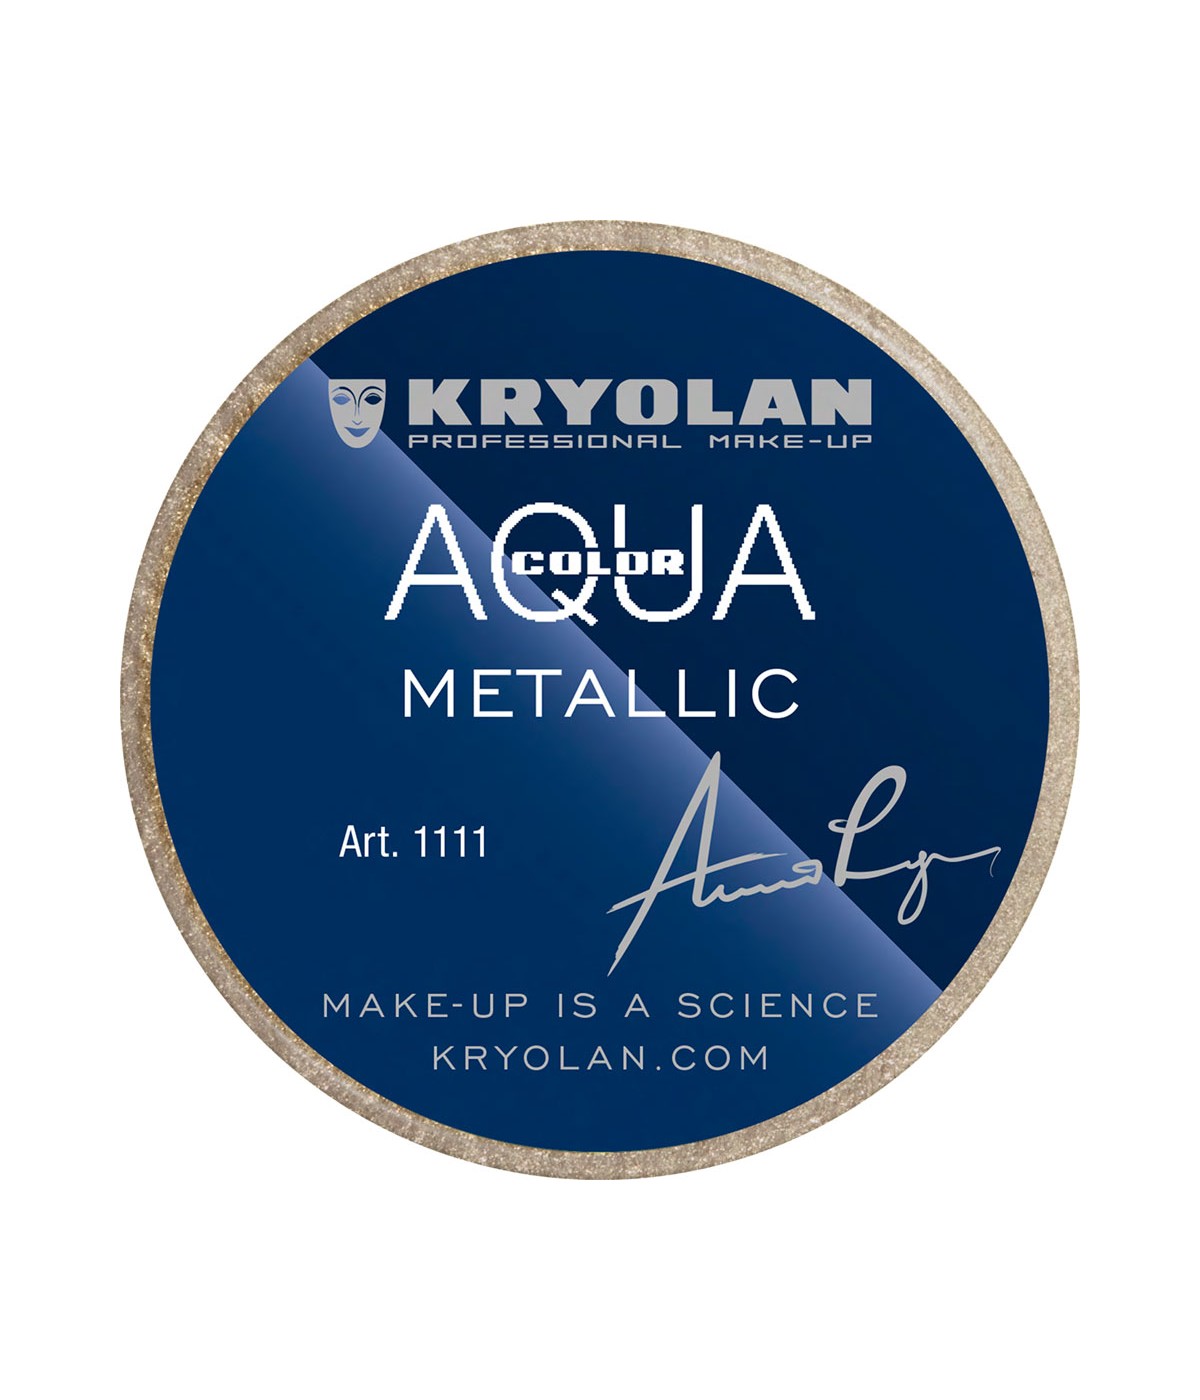 Kryolan Aquacolor Metallic, 8ml